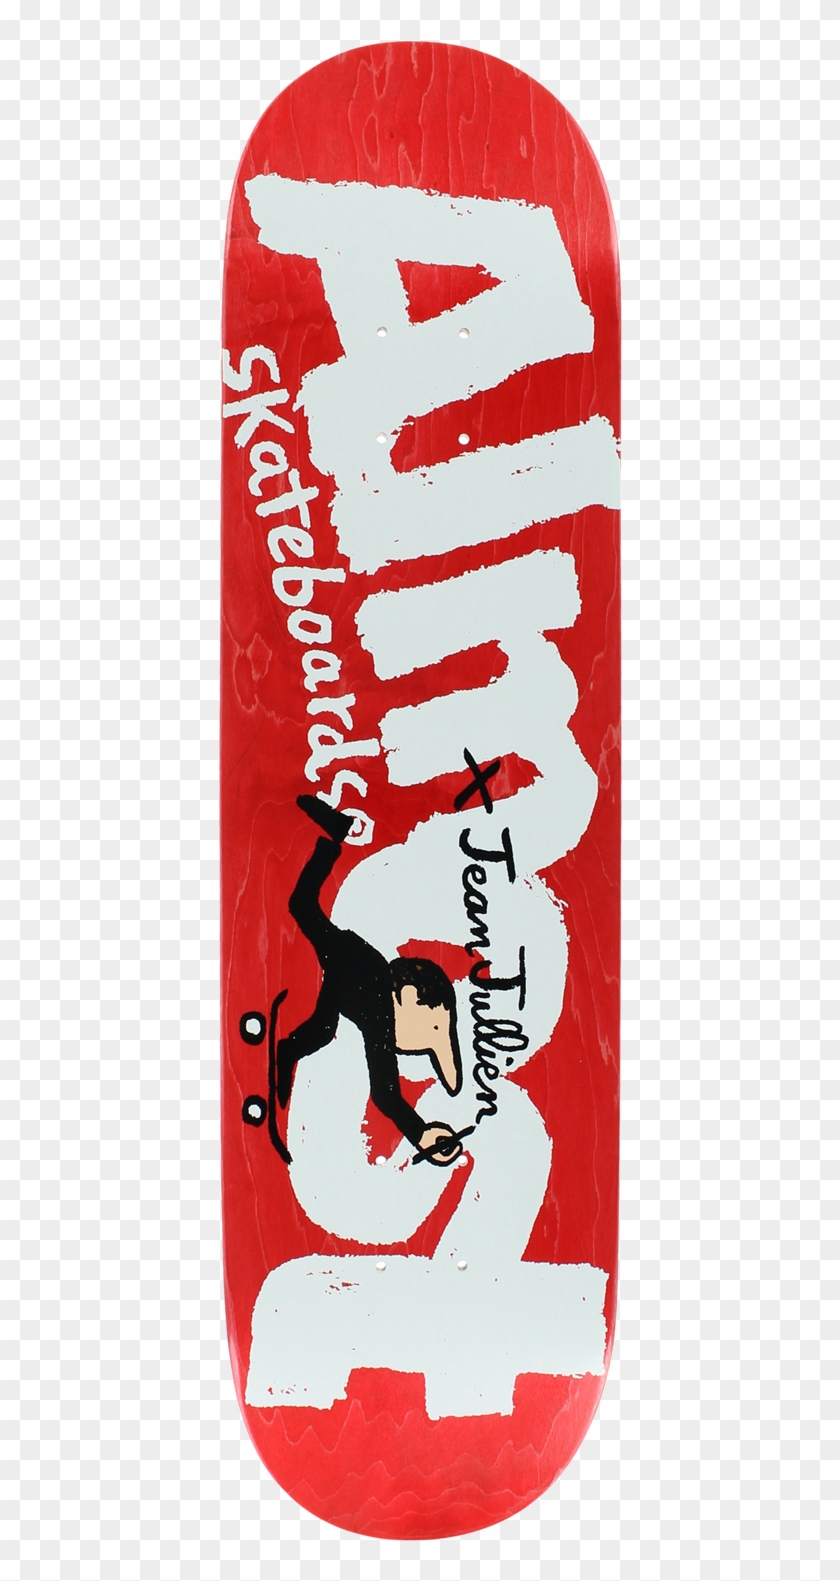 Almost Jean Jullien Logo Skateboard Deck 80 Red/white - Skateboard Deck Clipart #5339197